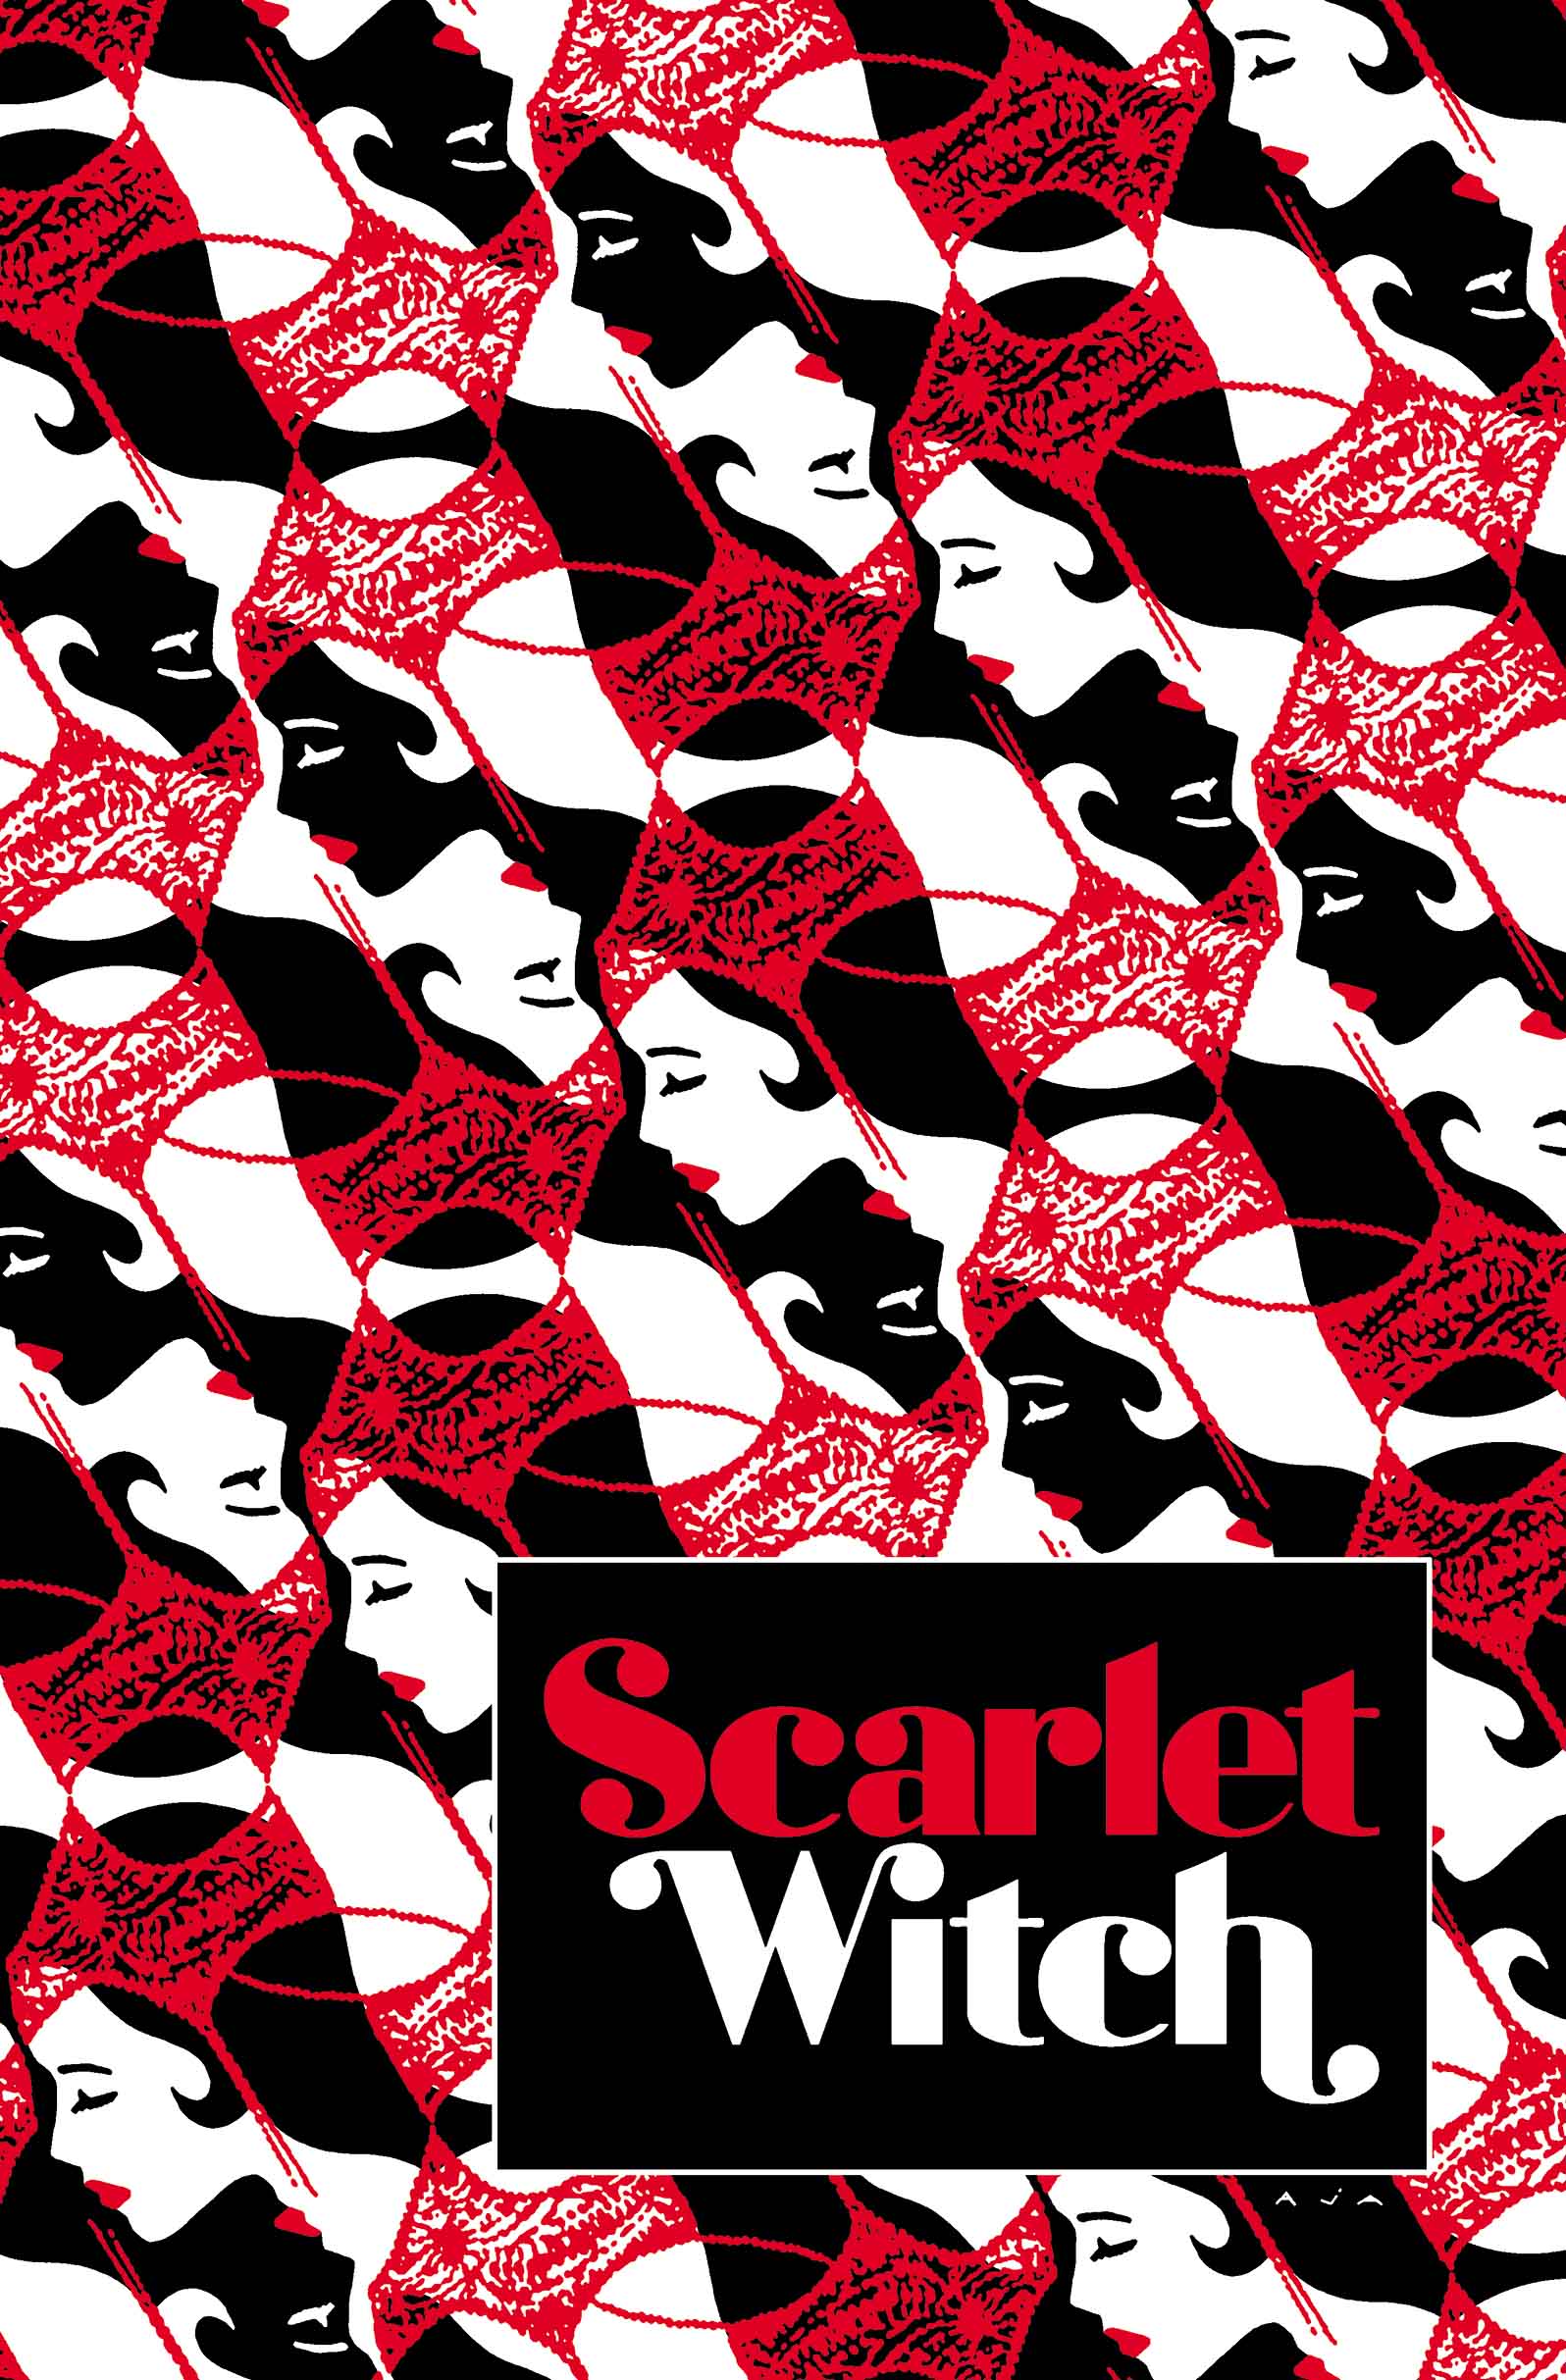 SCARLET WITCH #6